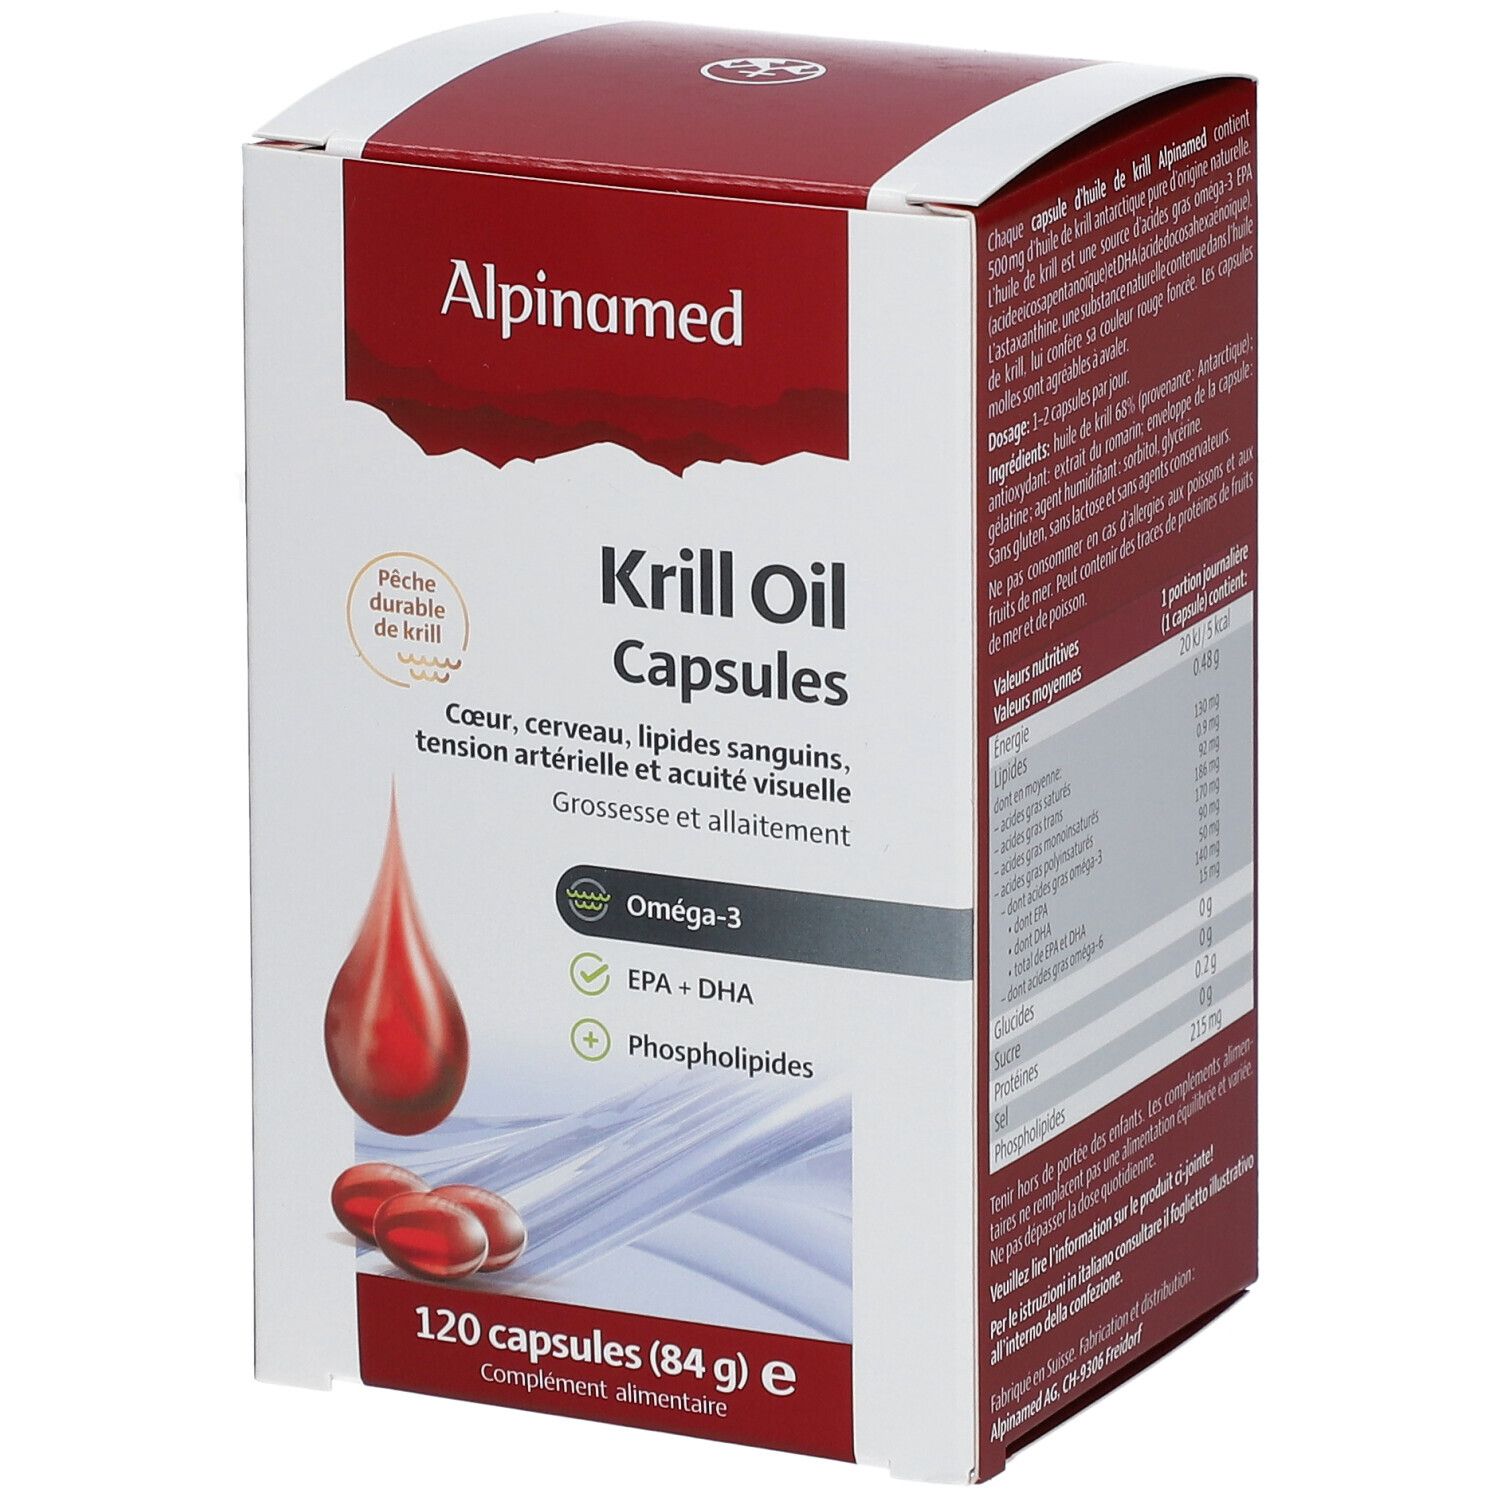 Alpinamed Krill Oil